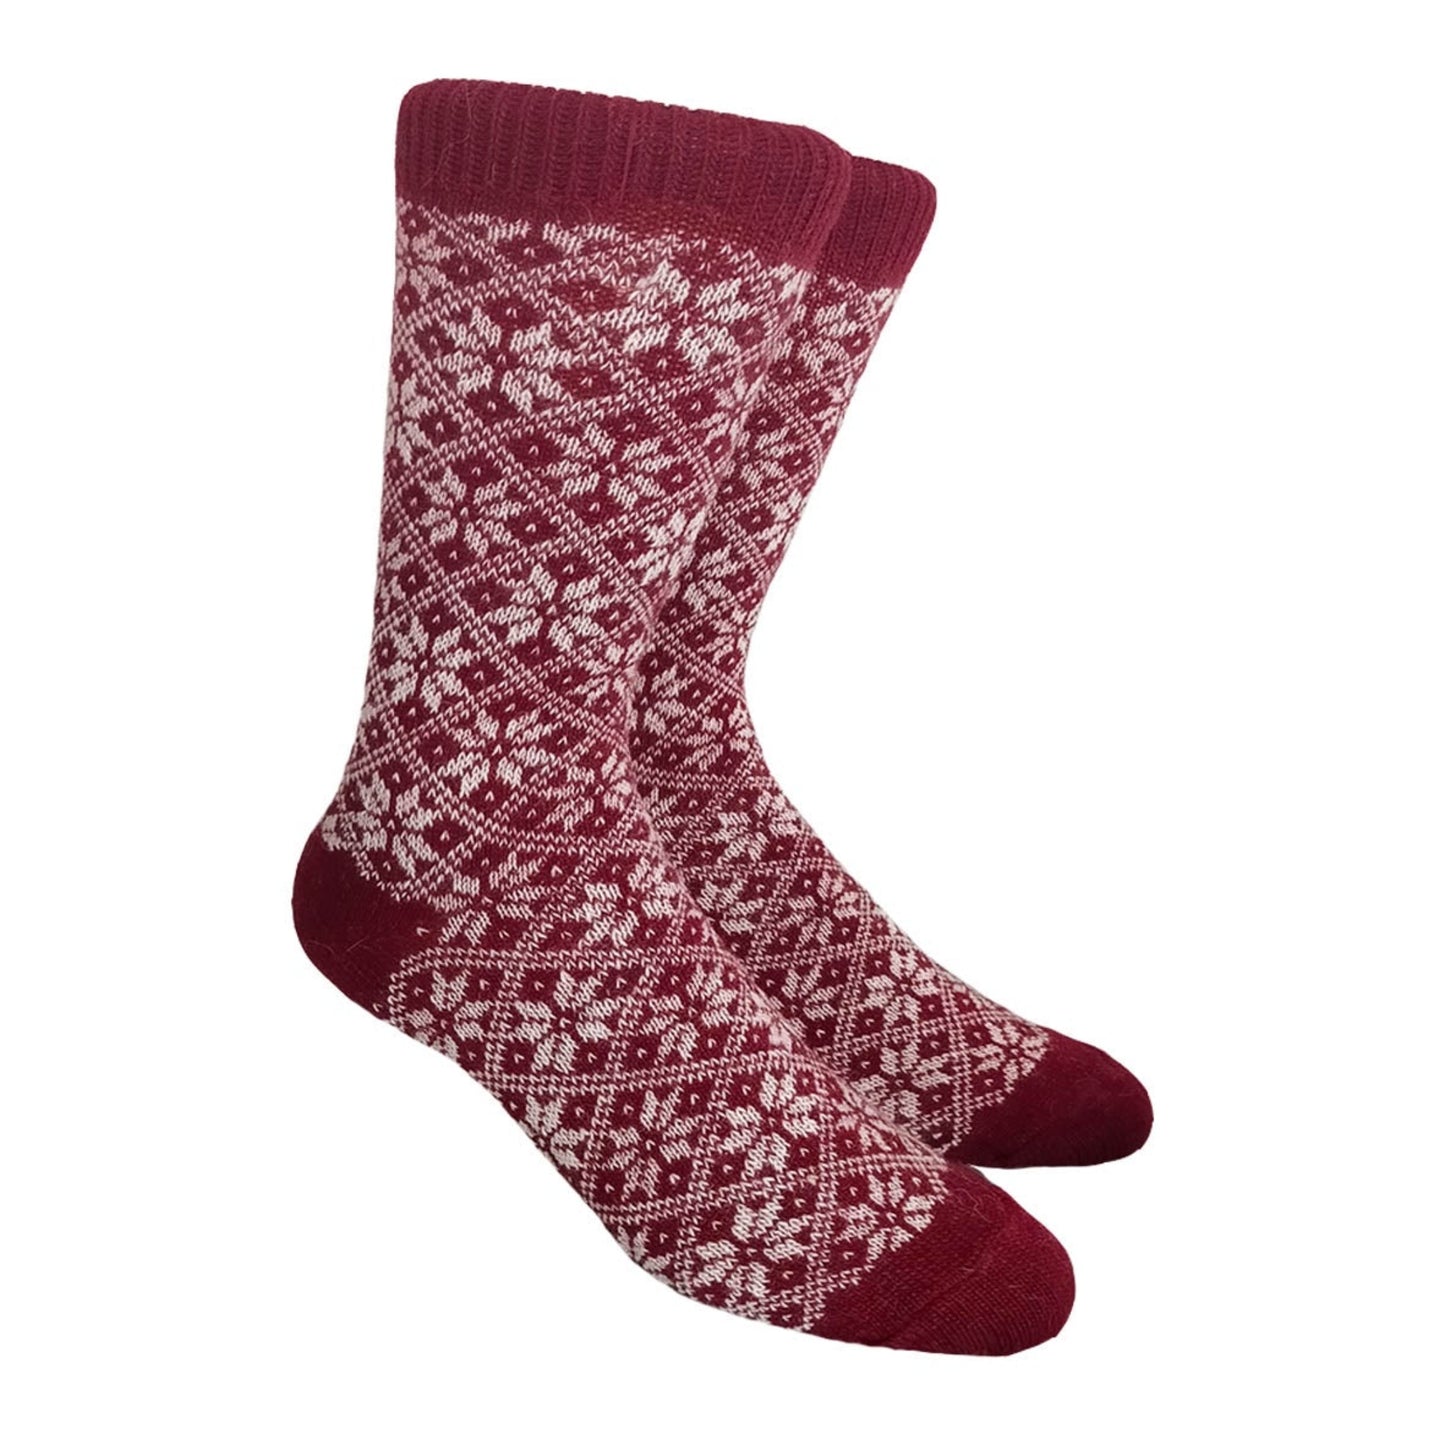 NORWOOL Wool Socks Patterned, Red/White (6587135164481)